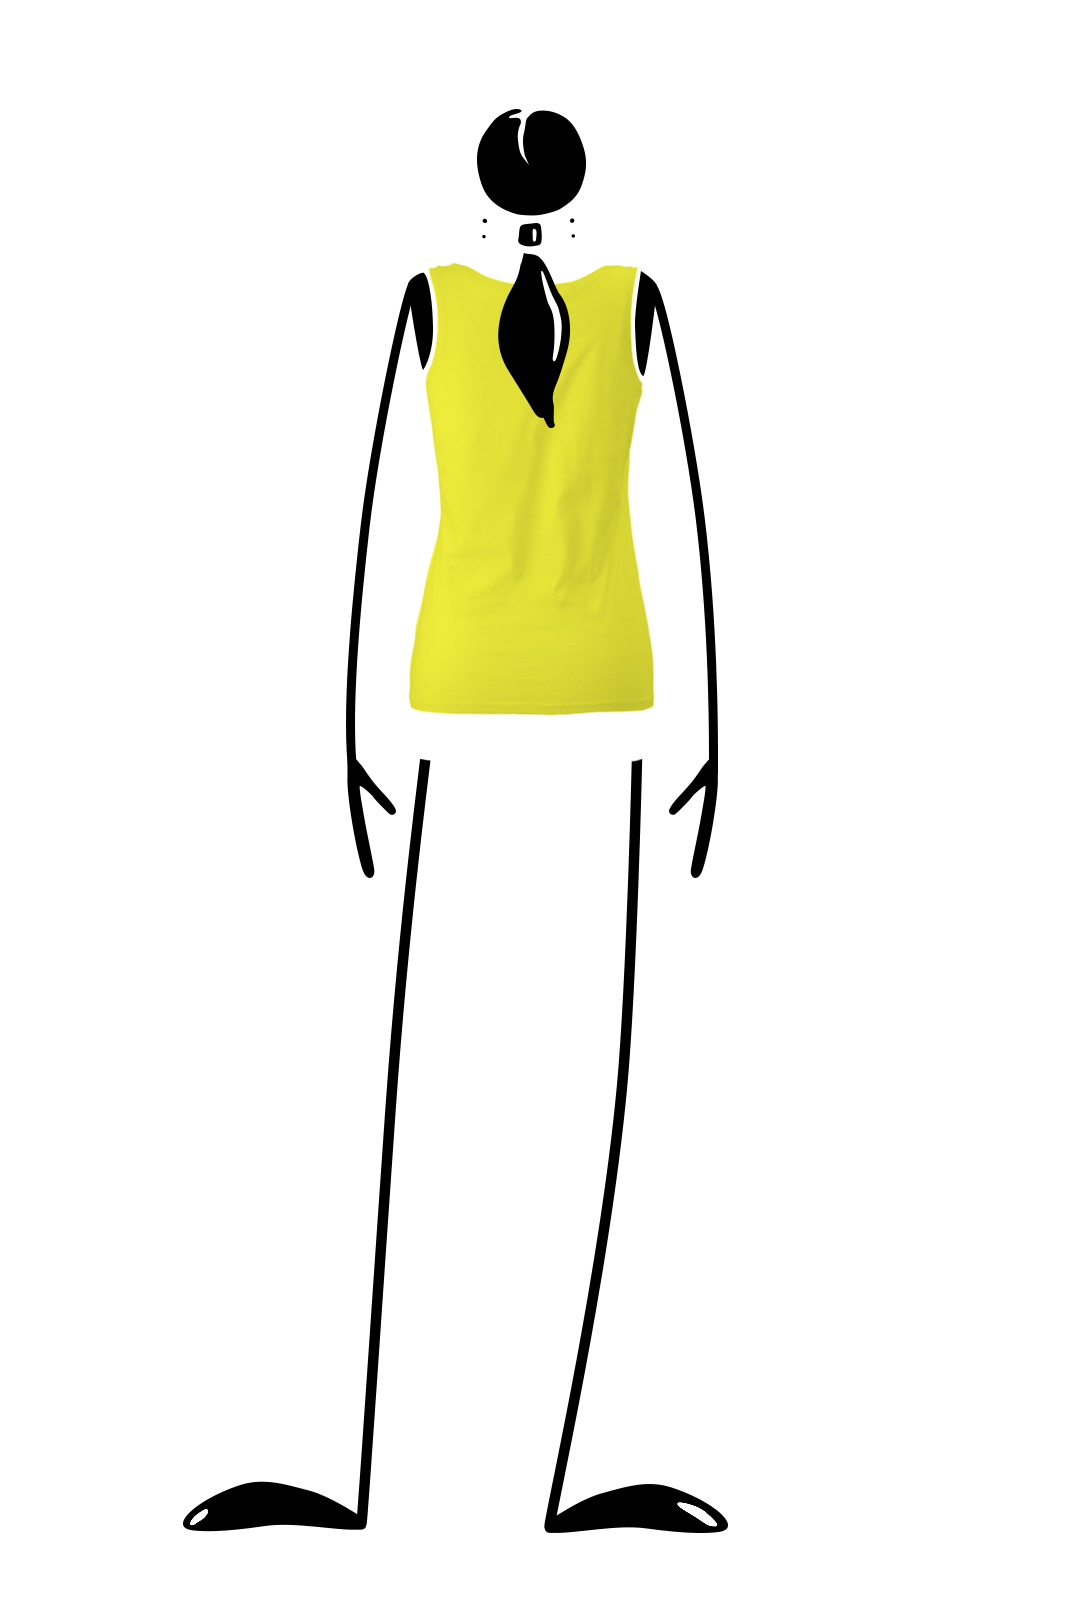 Women’s tank top yellow KOKO Monvic sportswear